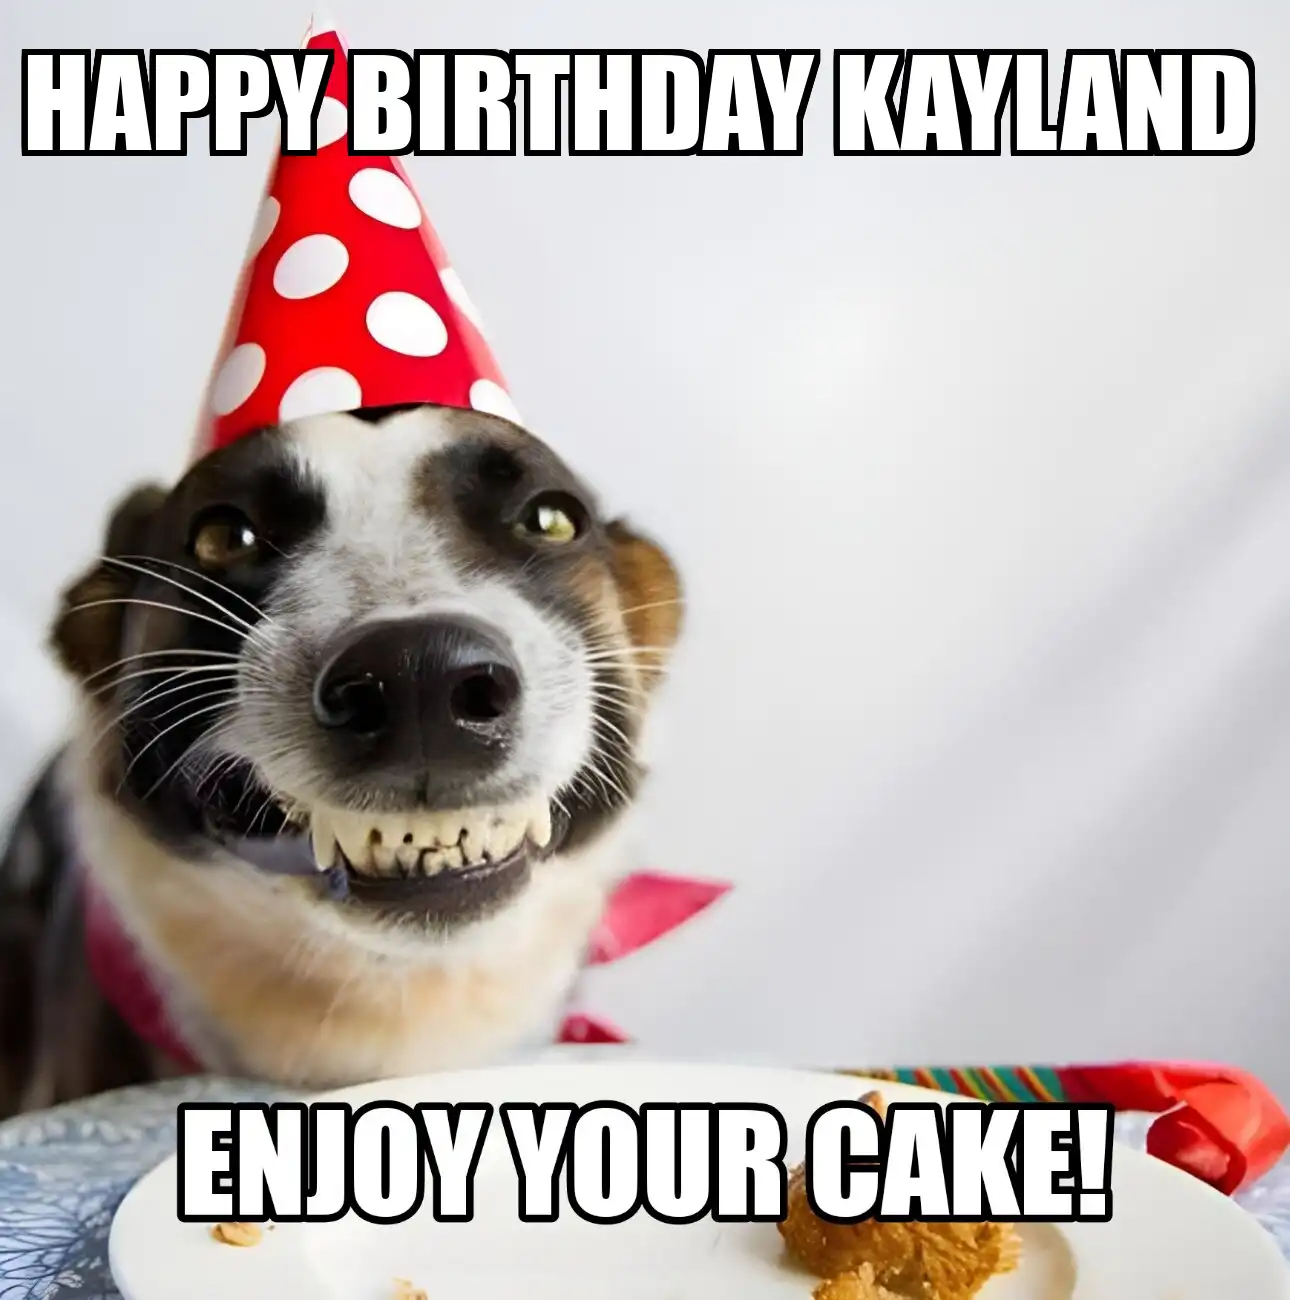 Happy Birthday Kayland Enjoy Your Cake Dog Meme